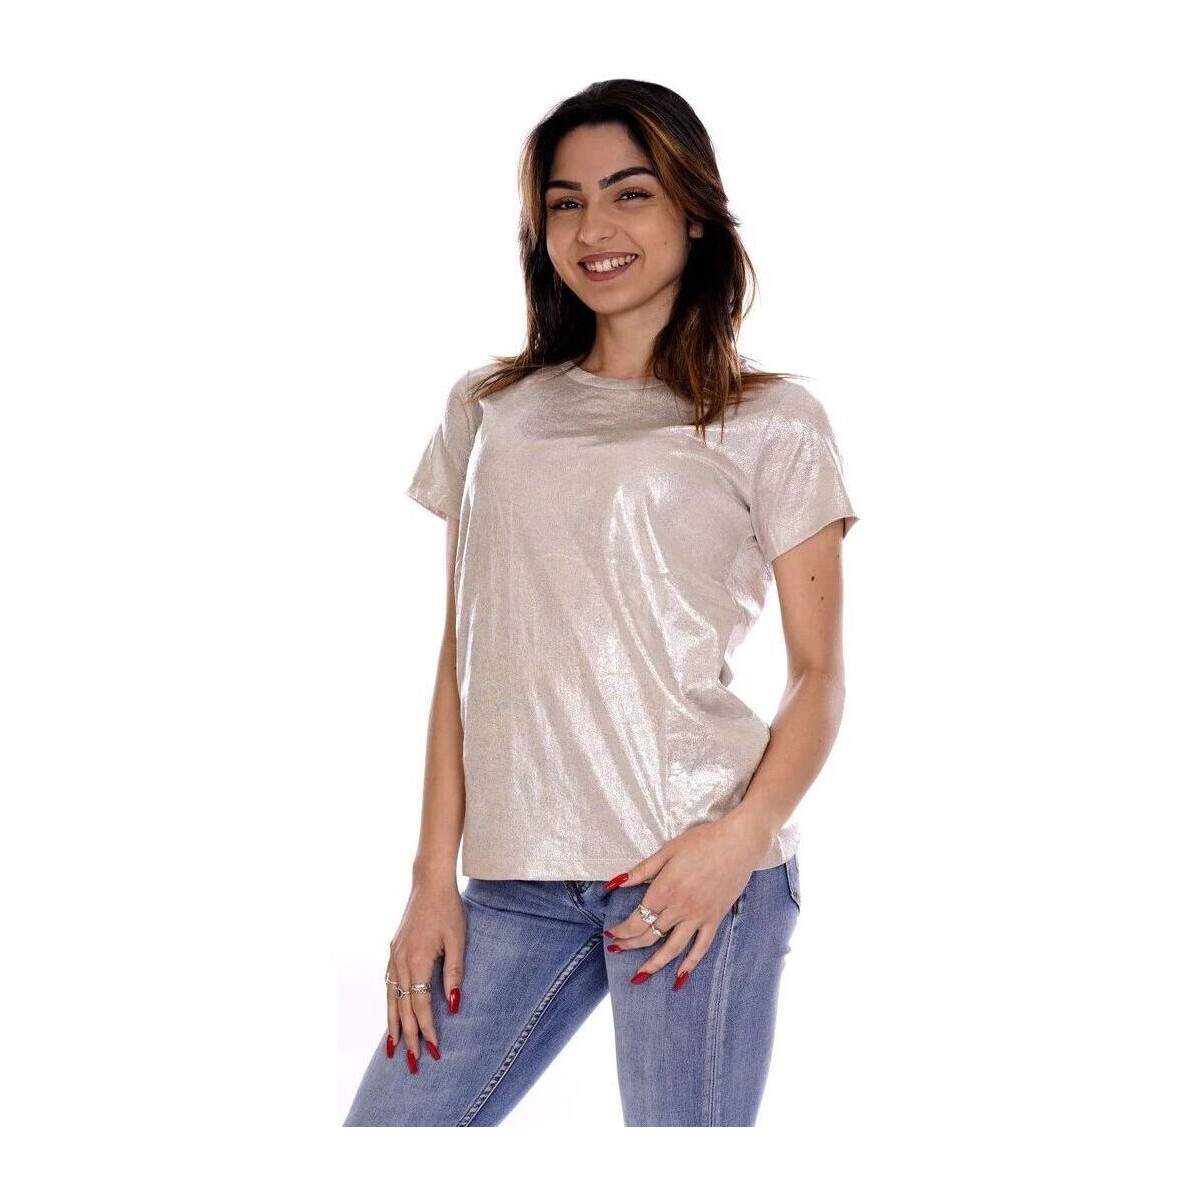 textil Mujer Tops y Camisetas Molly Bracken TS103CP-BEIGE Beige